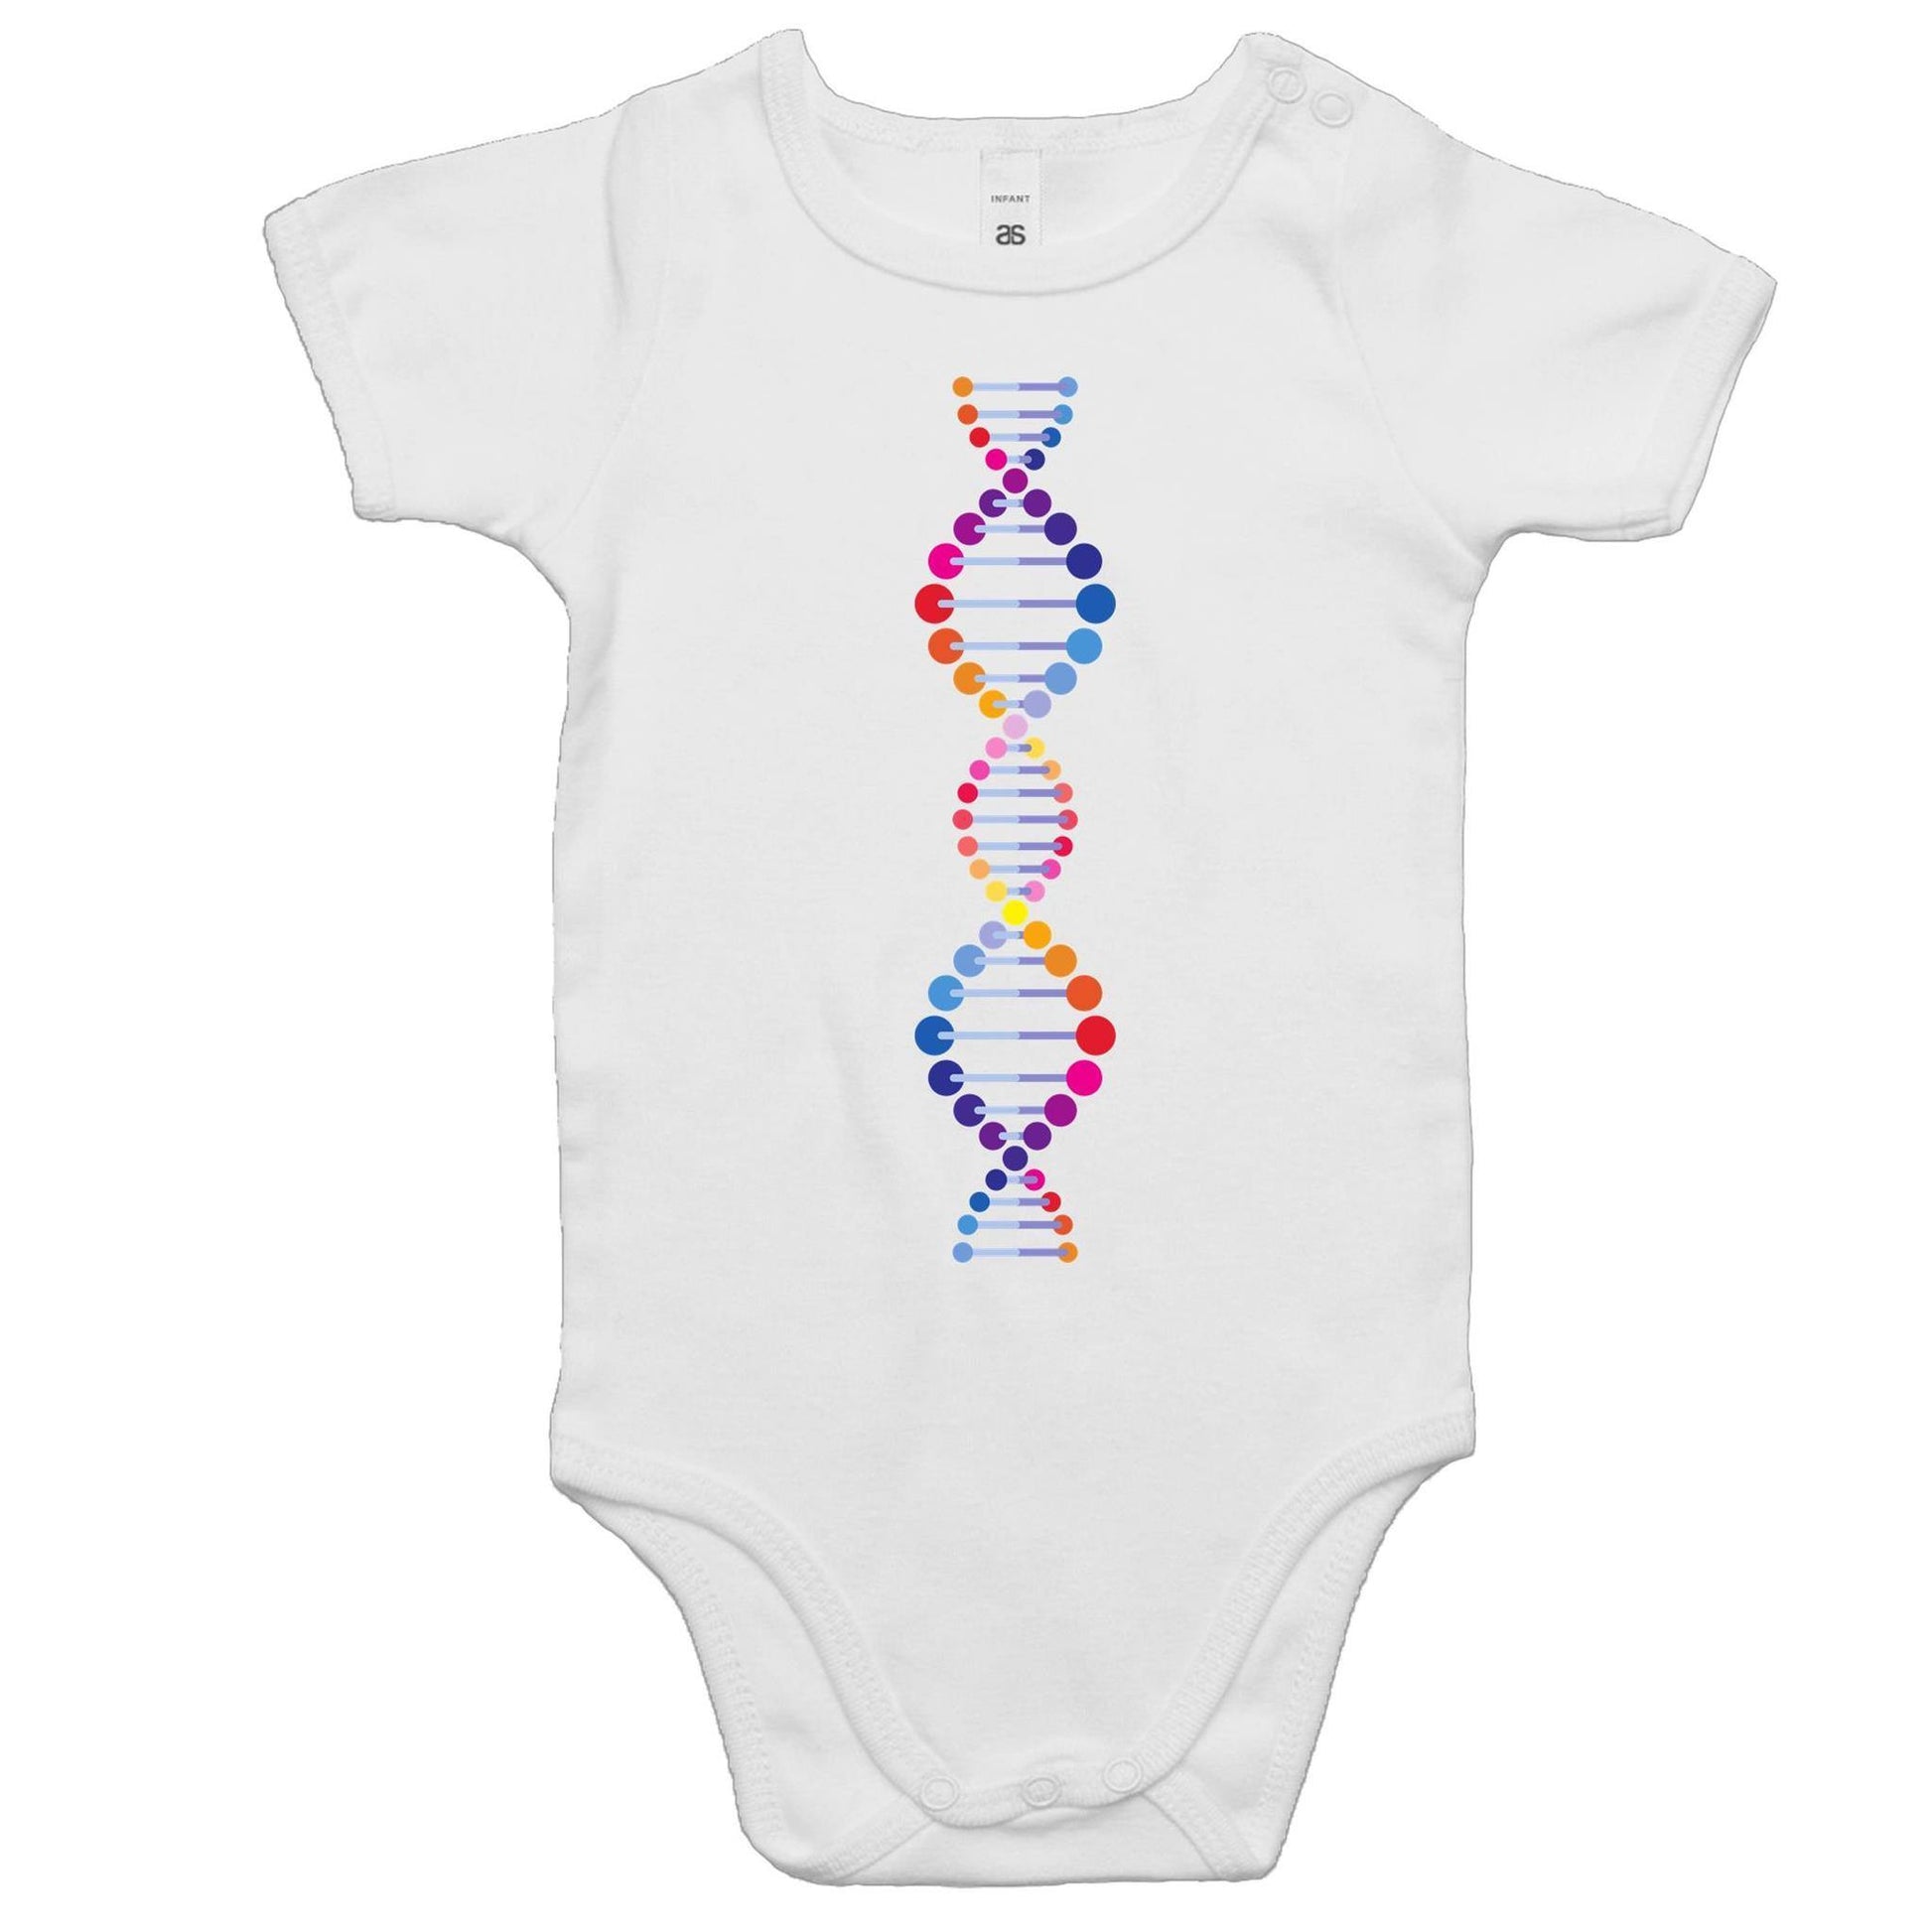 DNA - Baby Bodysuit White Baby Bodysuit kids Science